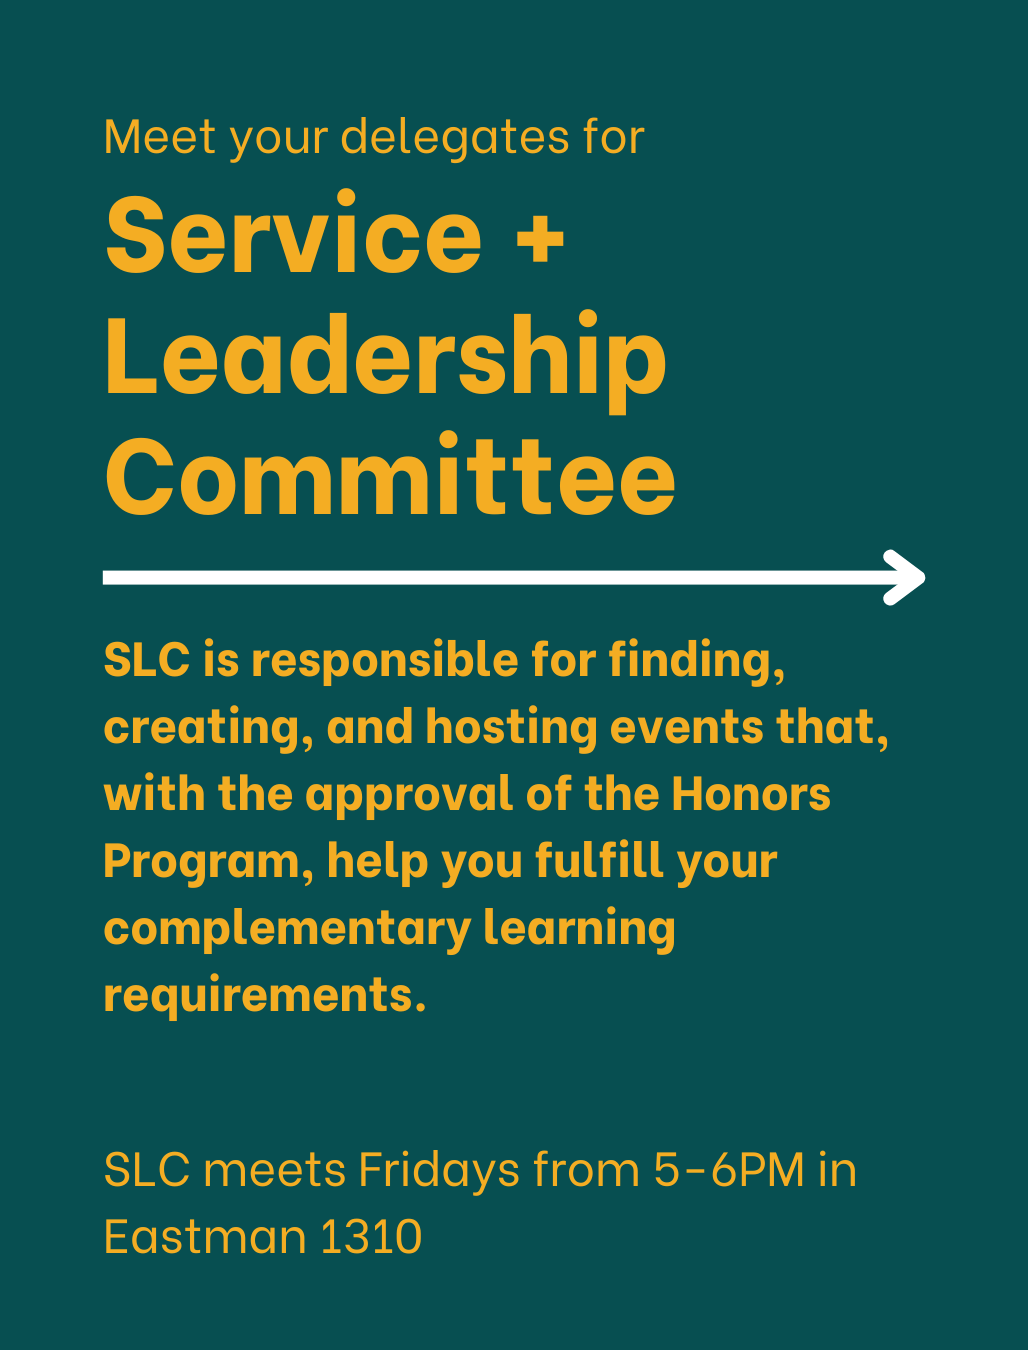 Service+Leadership Committee